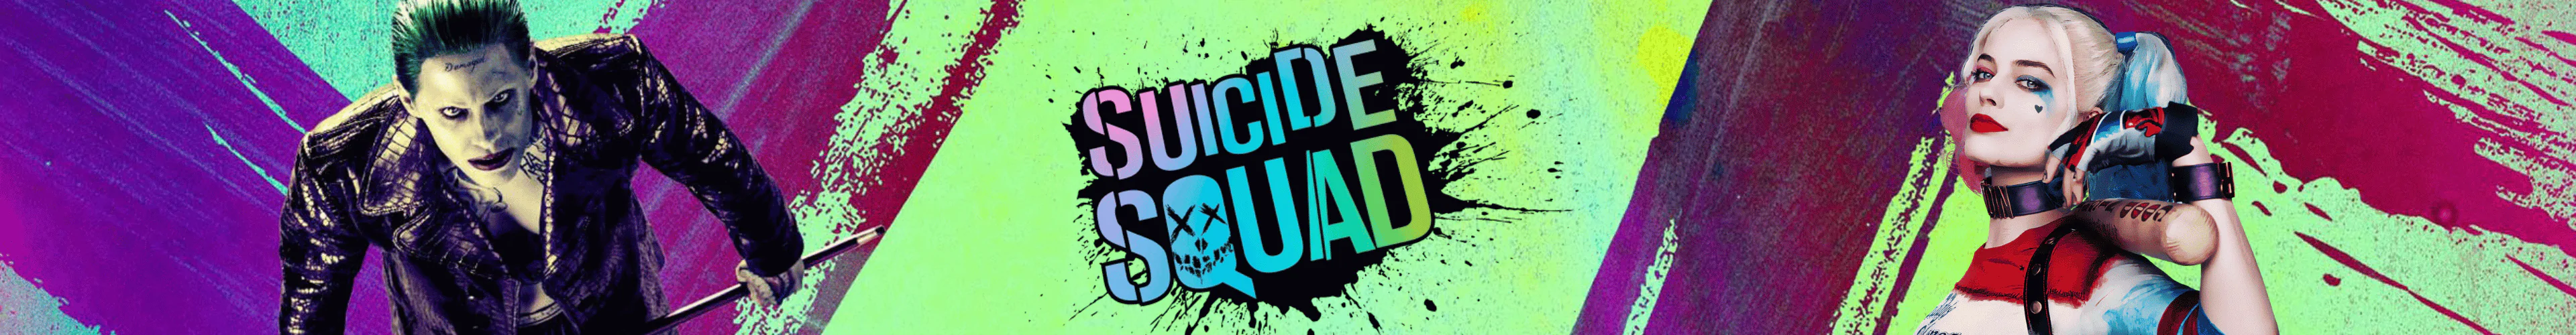 Suicide Squad pencil cases banner